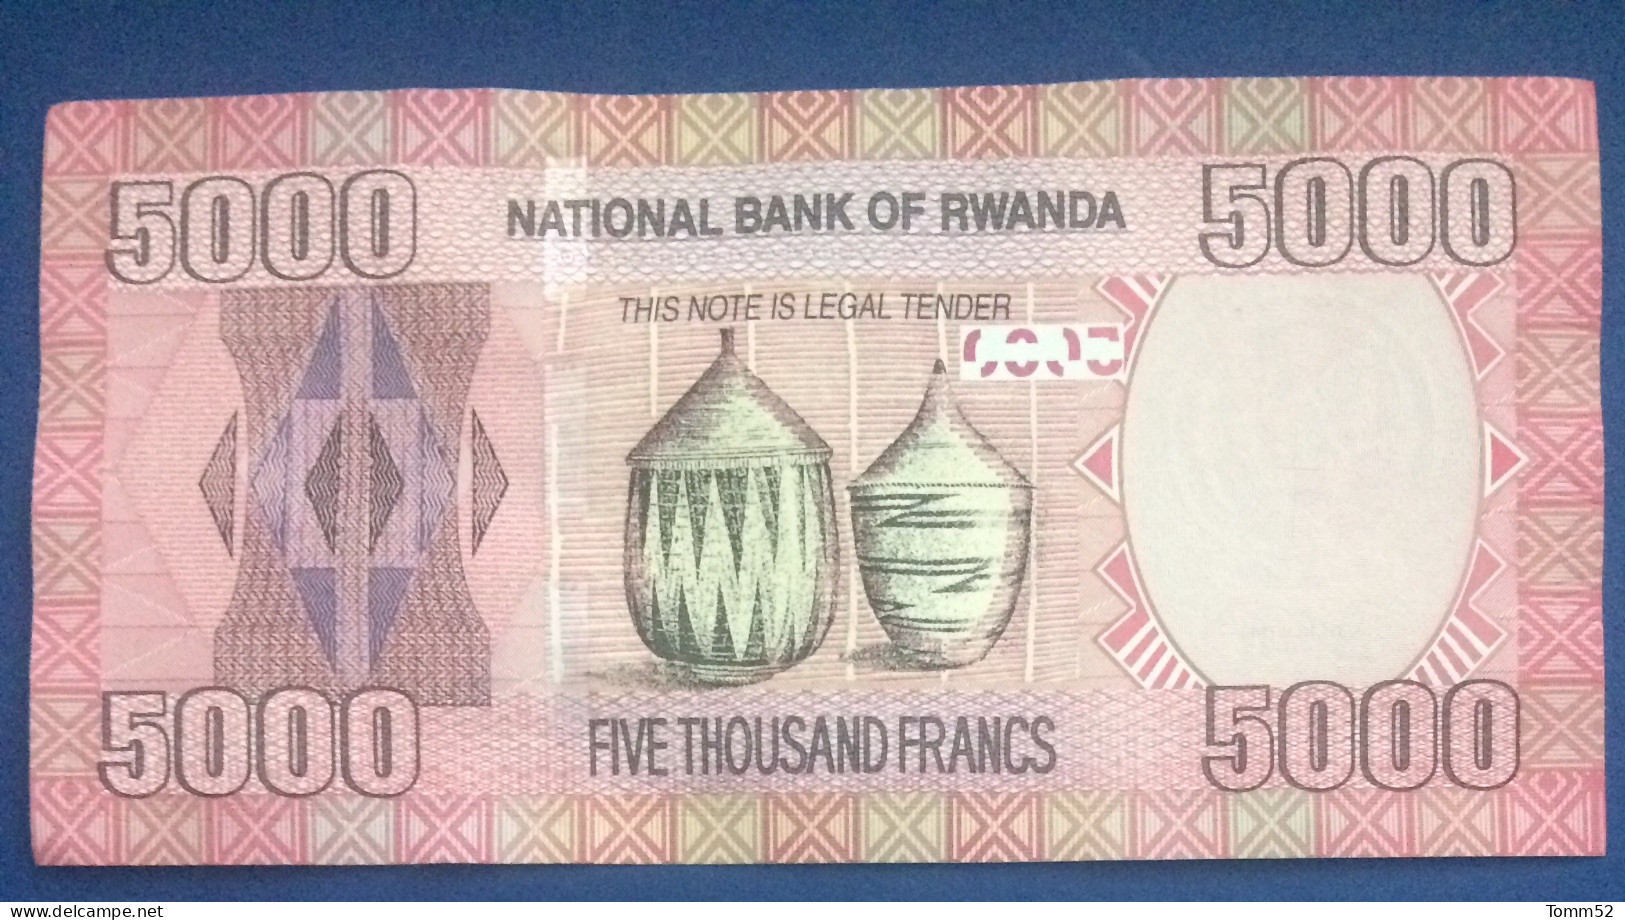 RWANDA 5000 Francs UNC - Rwanda